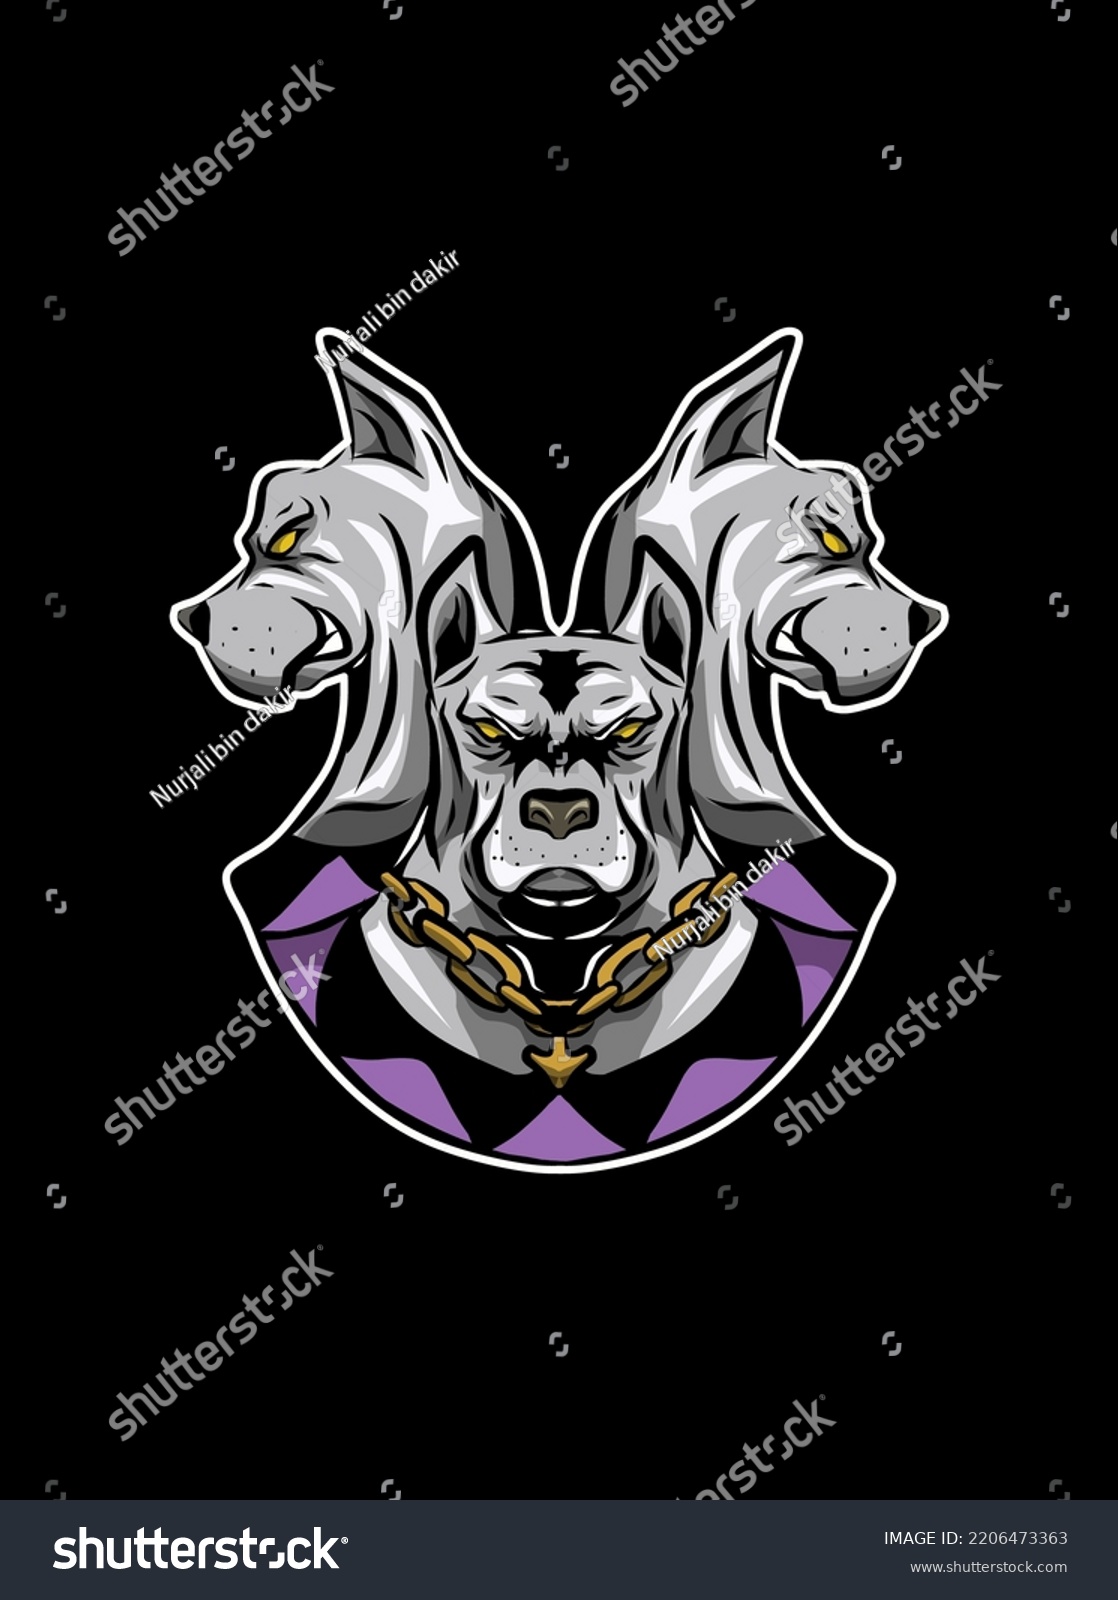 SVG of three dogs head for shirt design or esport logo svg